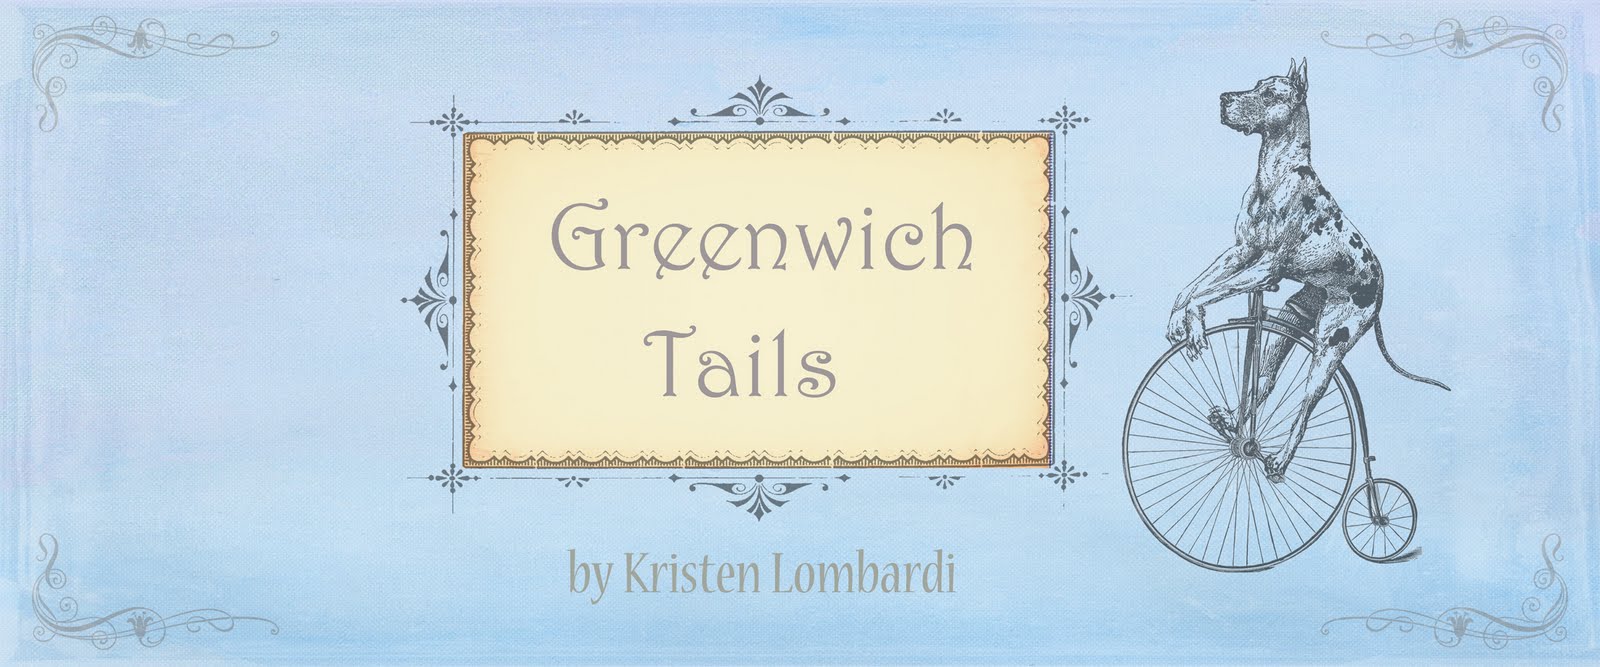 Greenwich Tails